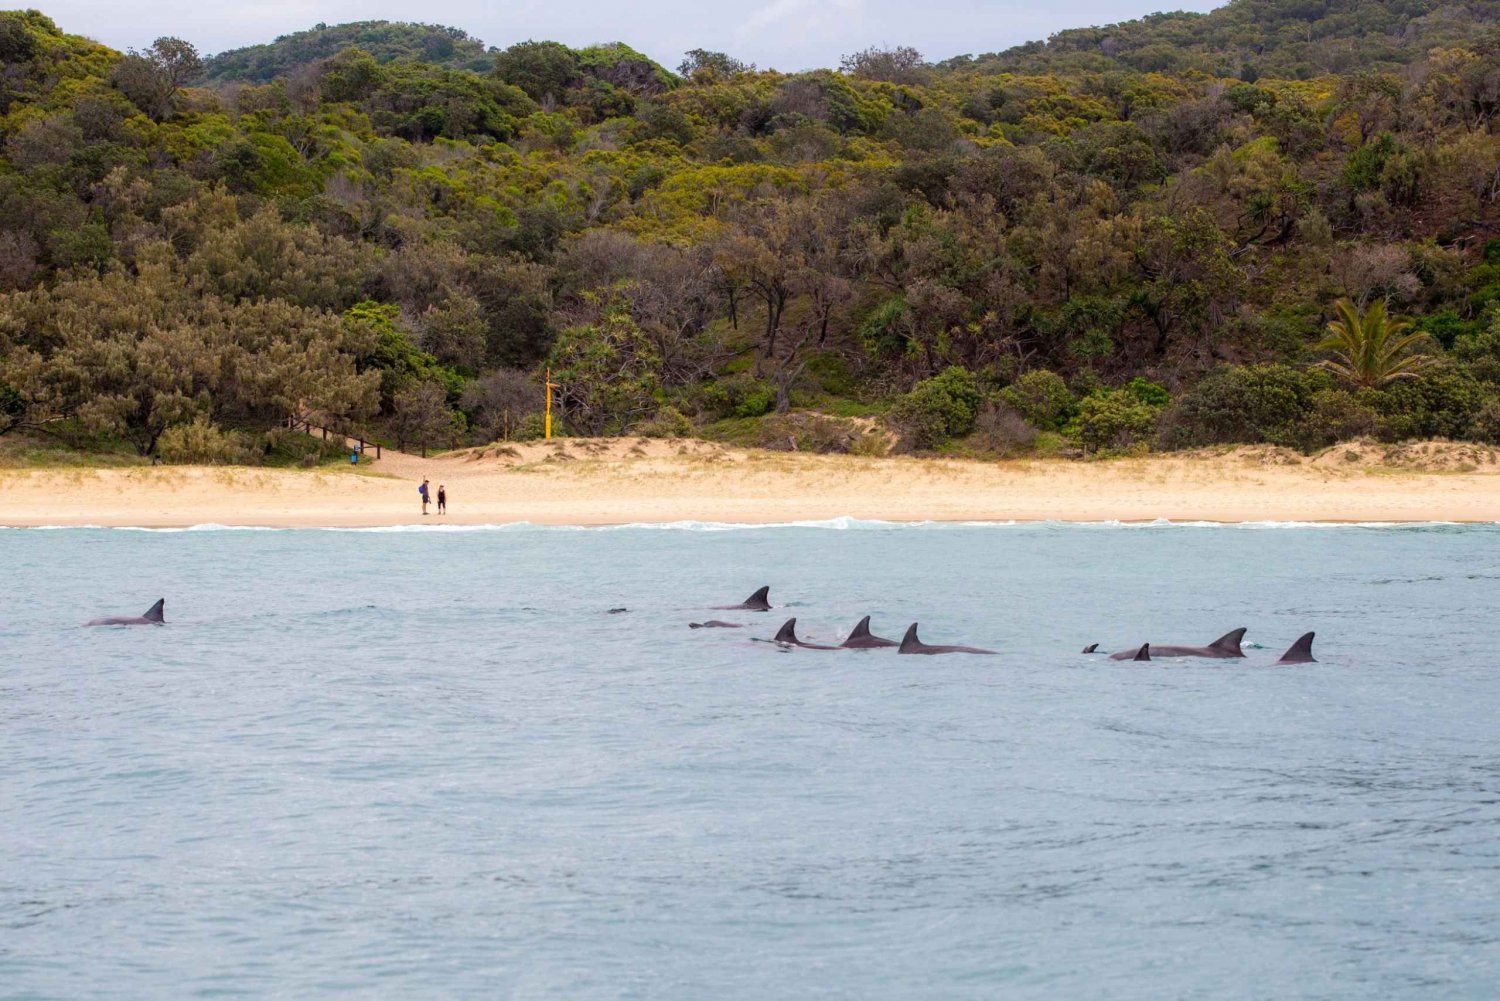 Noosa Heads: Ocean Rider Dolphin Safari